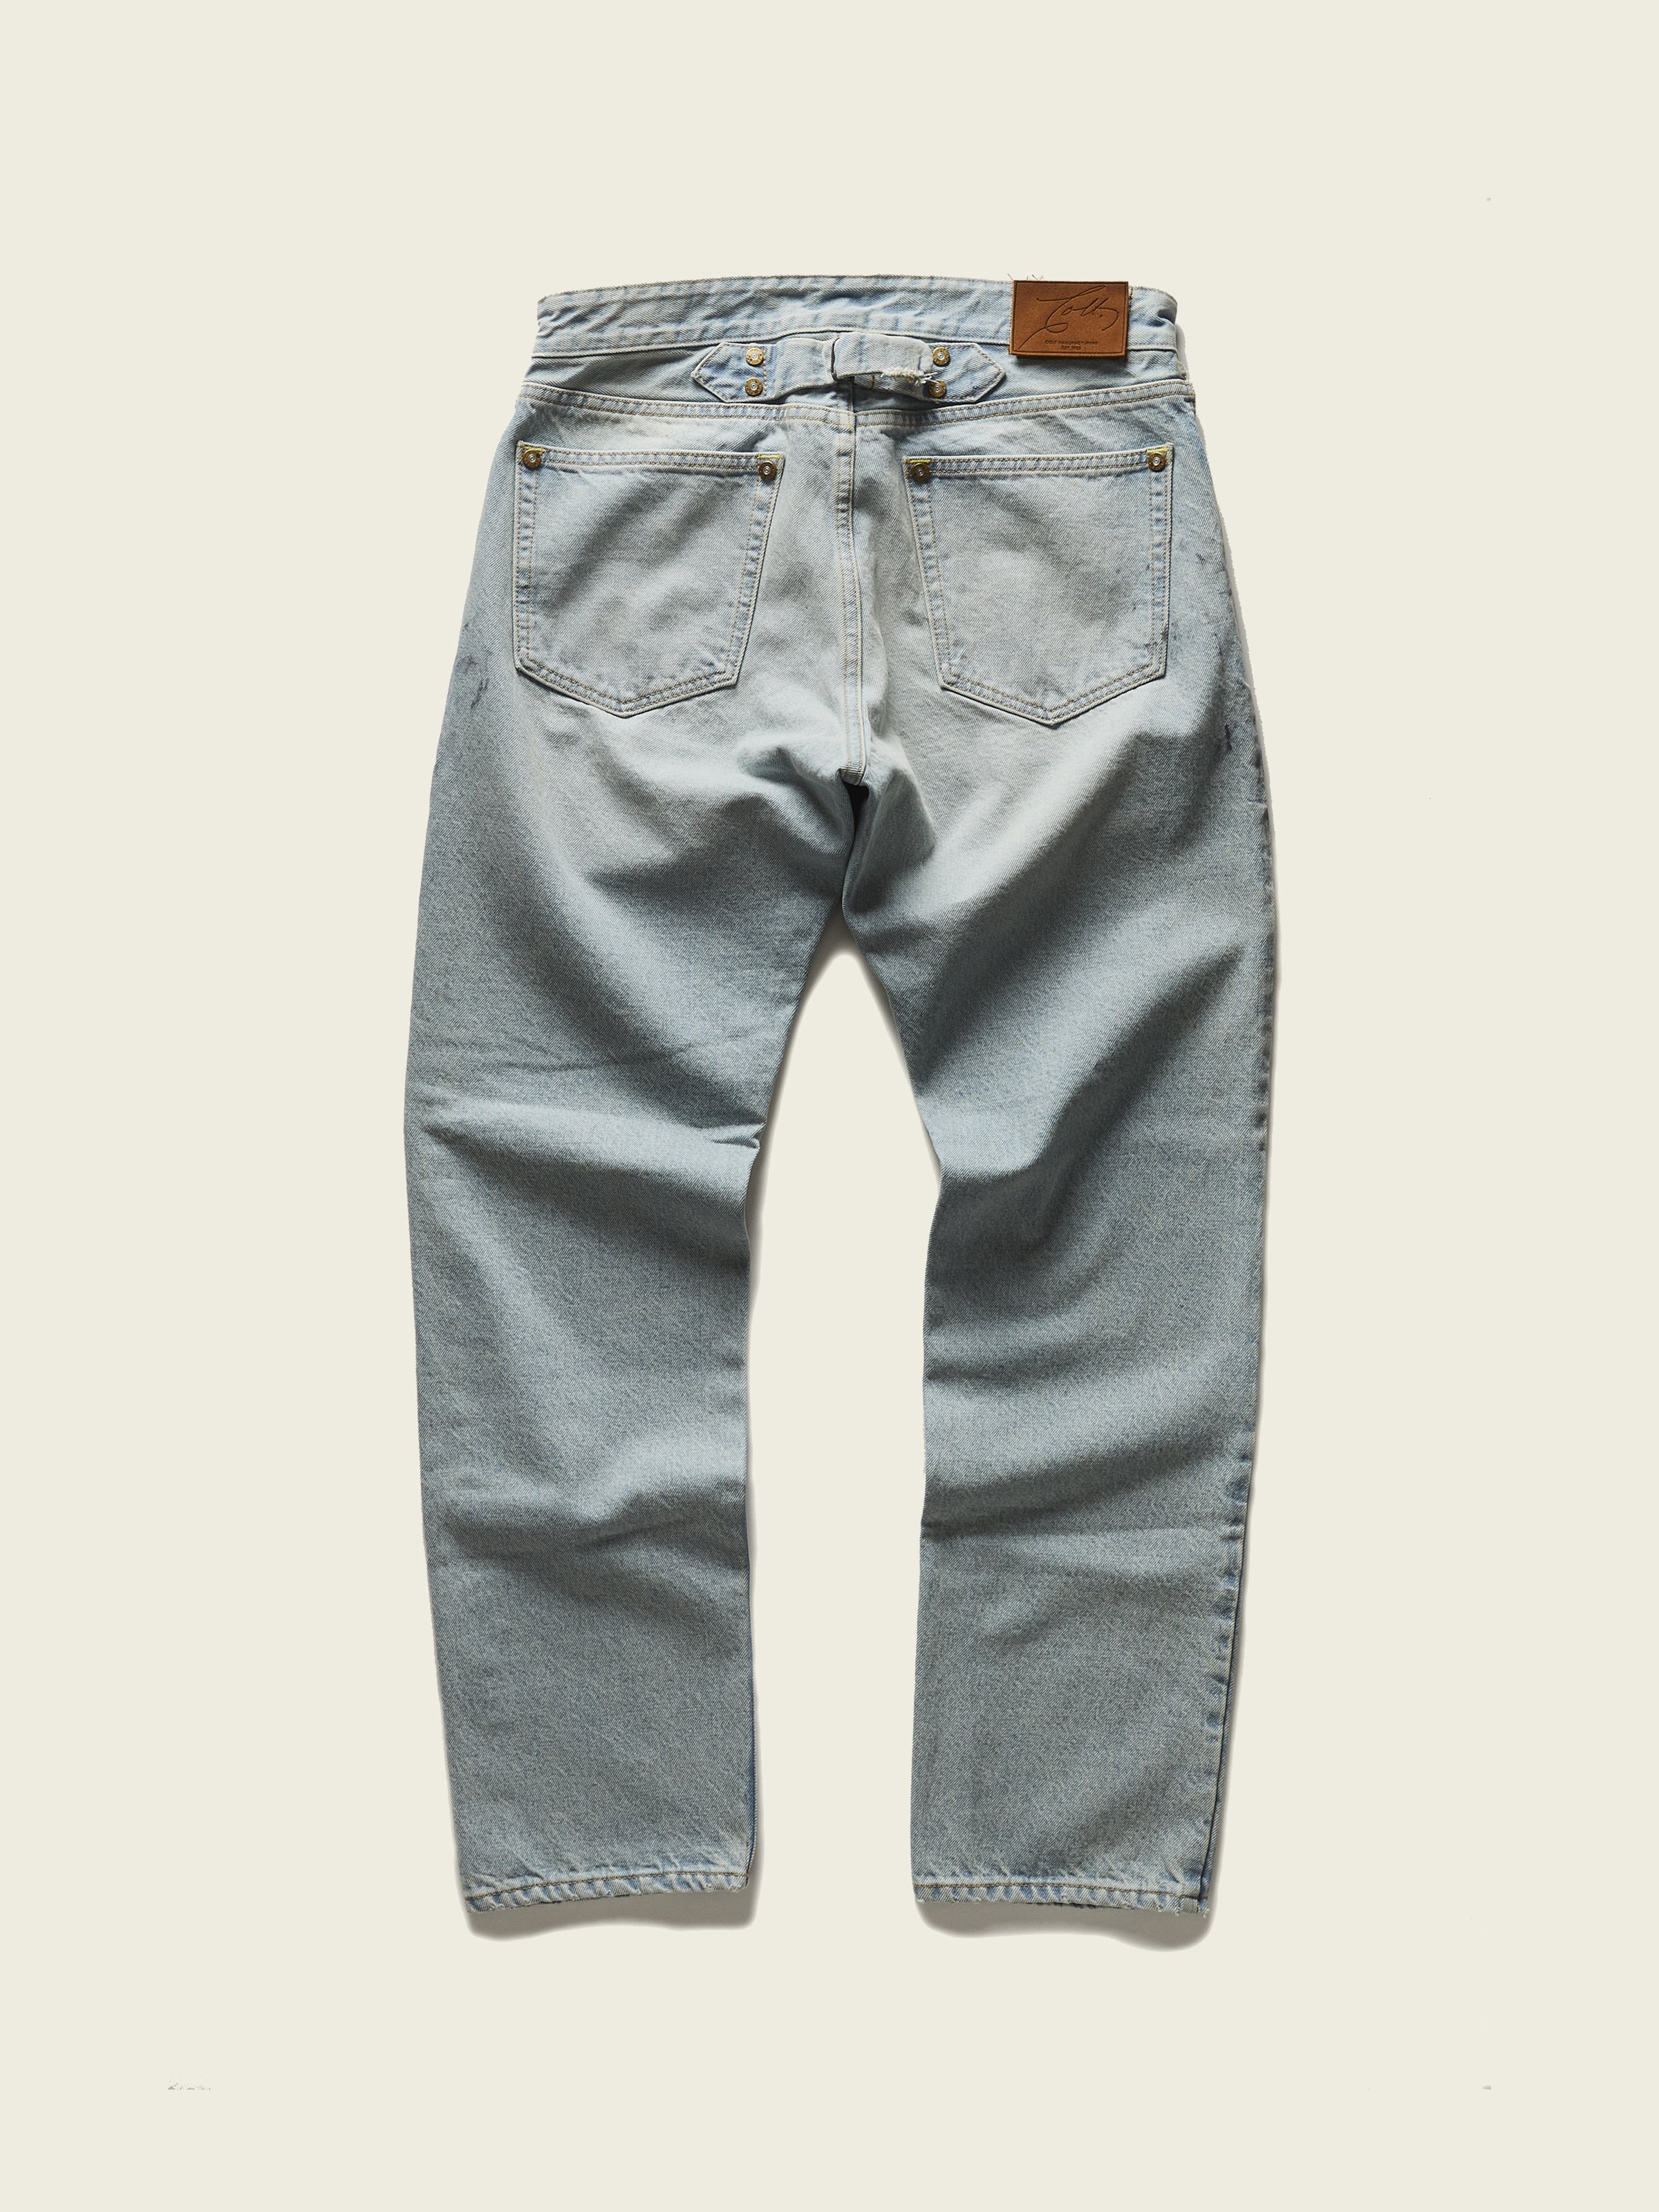 Buckle Back Jeans in Selvedge Denim